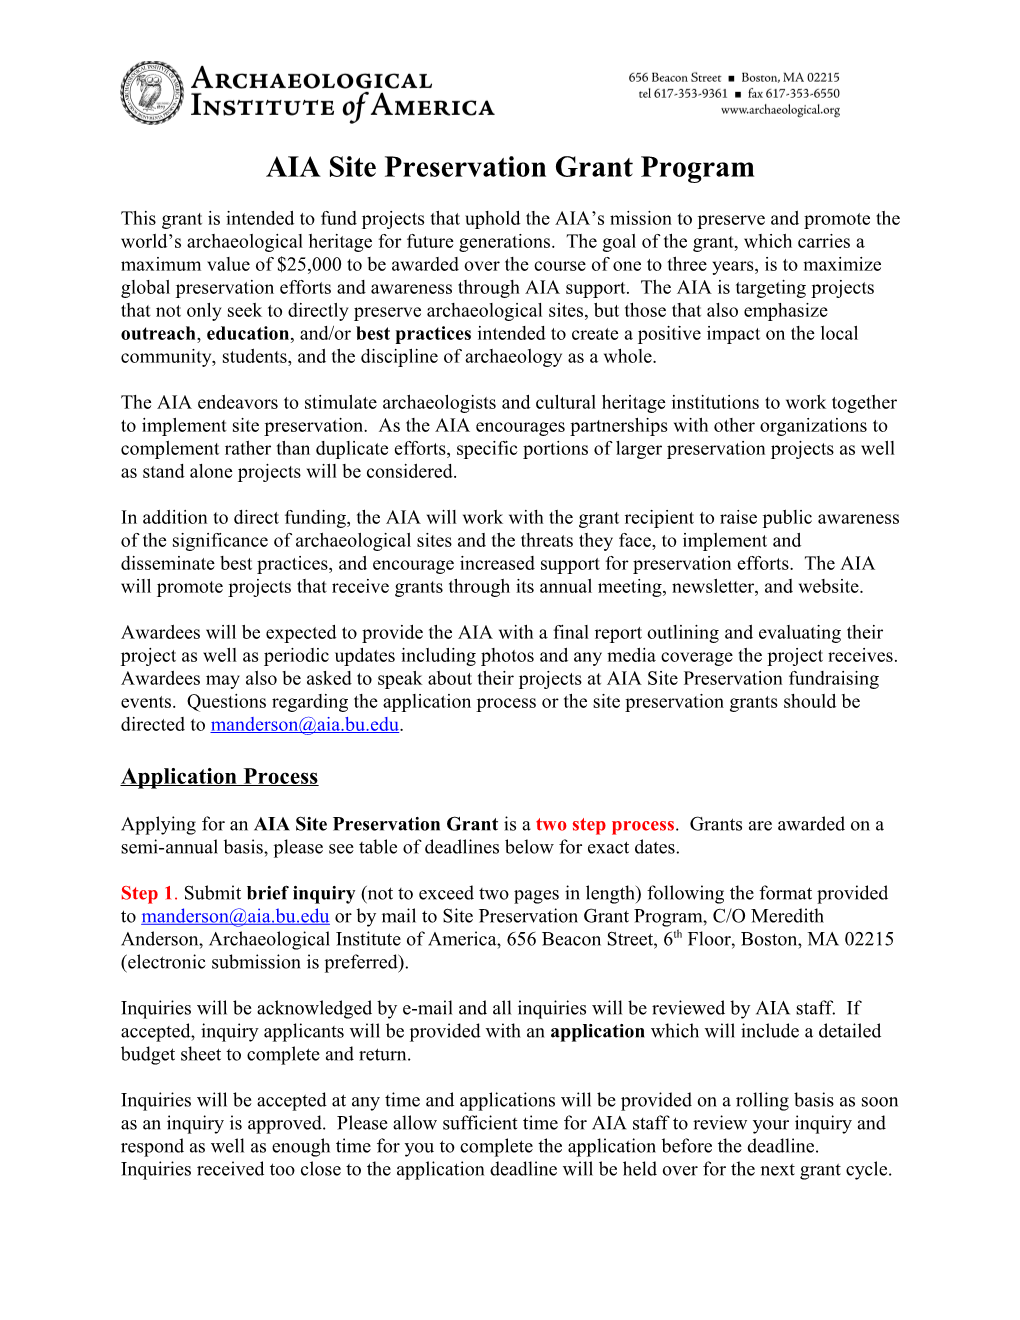 Archaeological Institute of America Site Preservation Grant Program